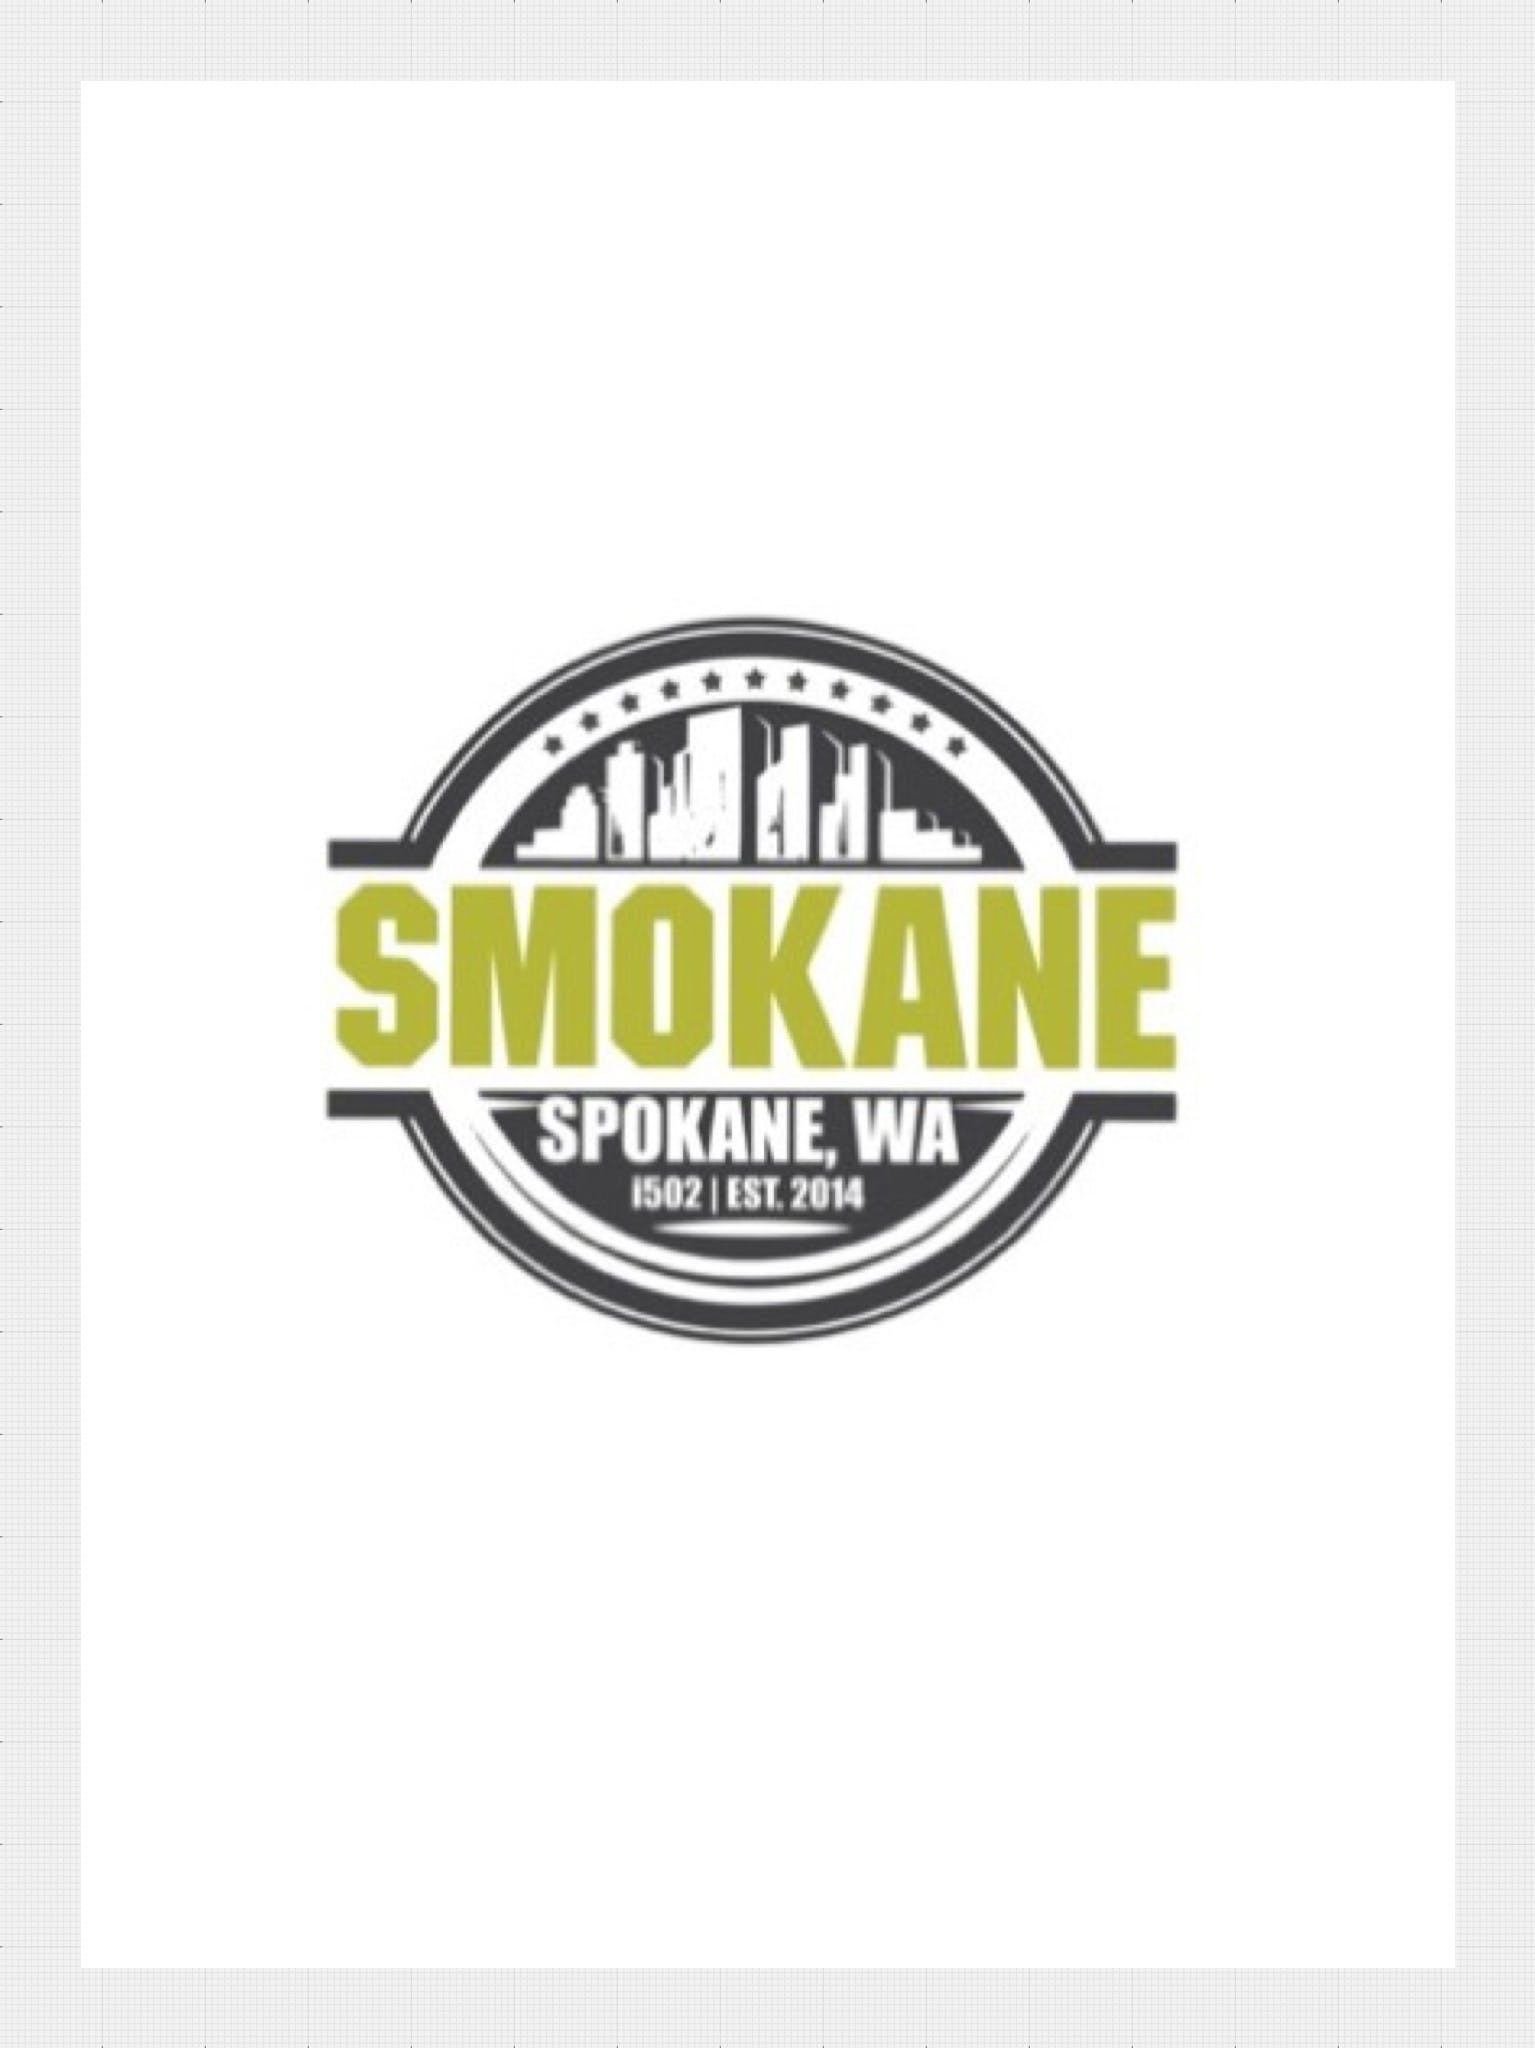 Smokane - Medical Marijuana Doctors - Cannabizme.com